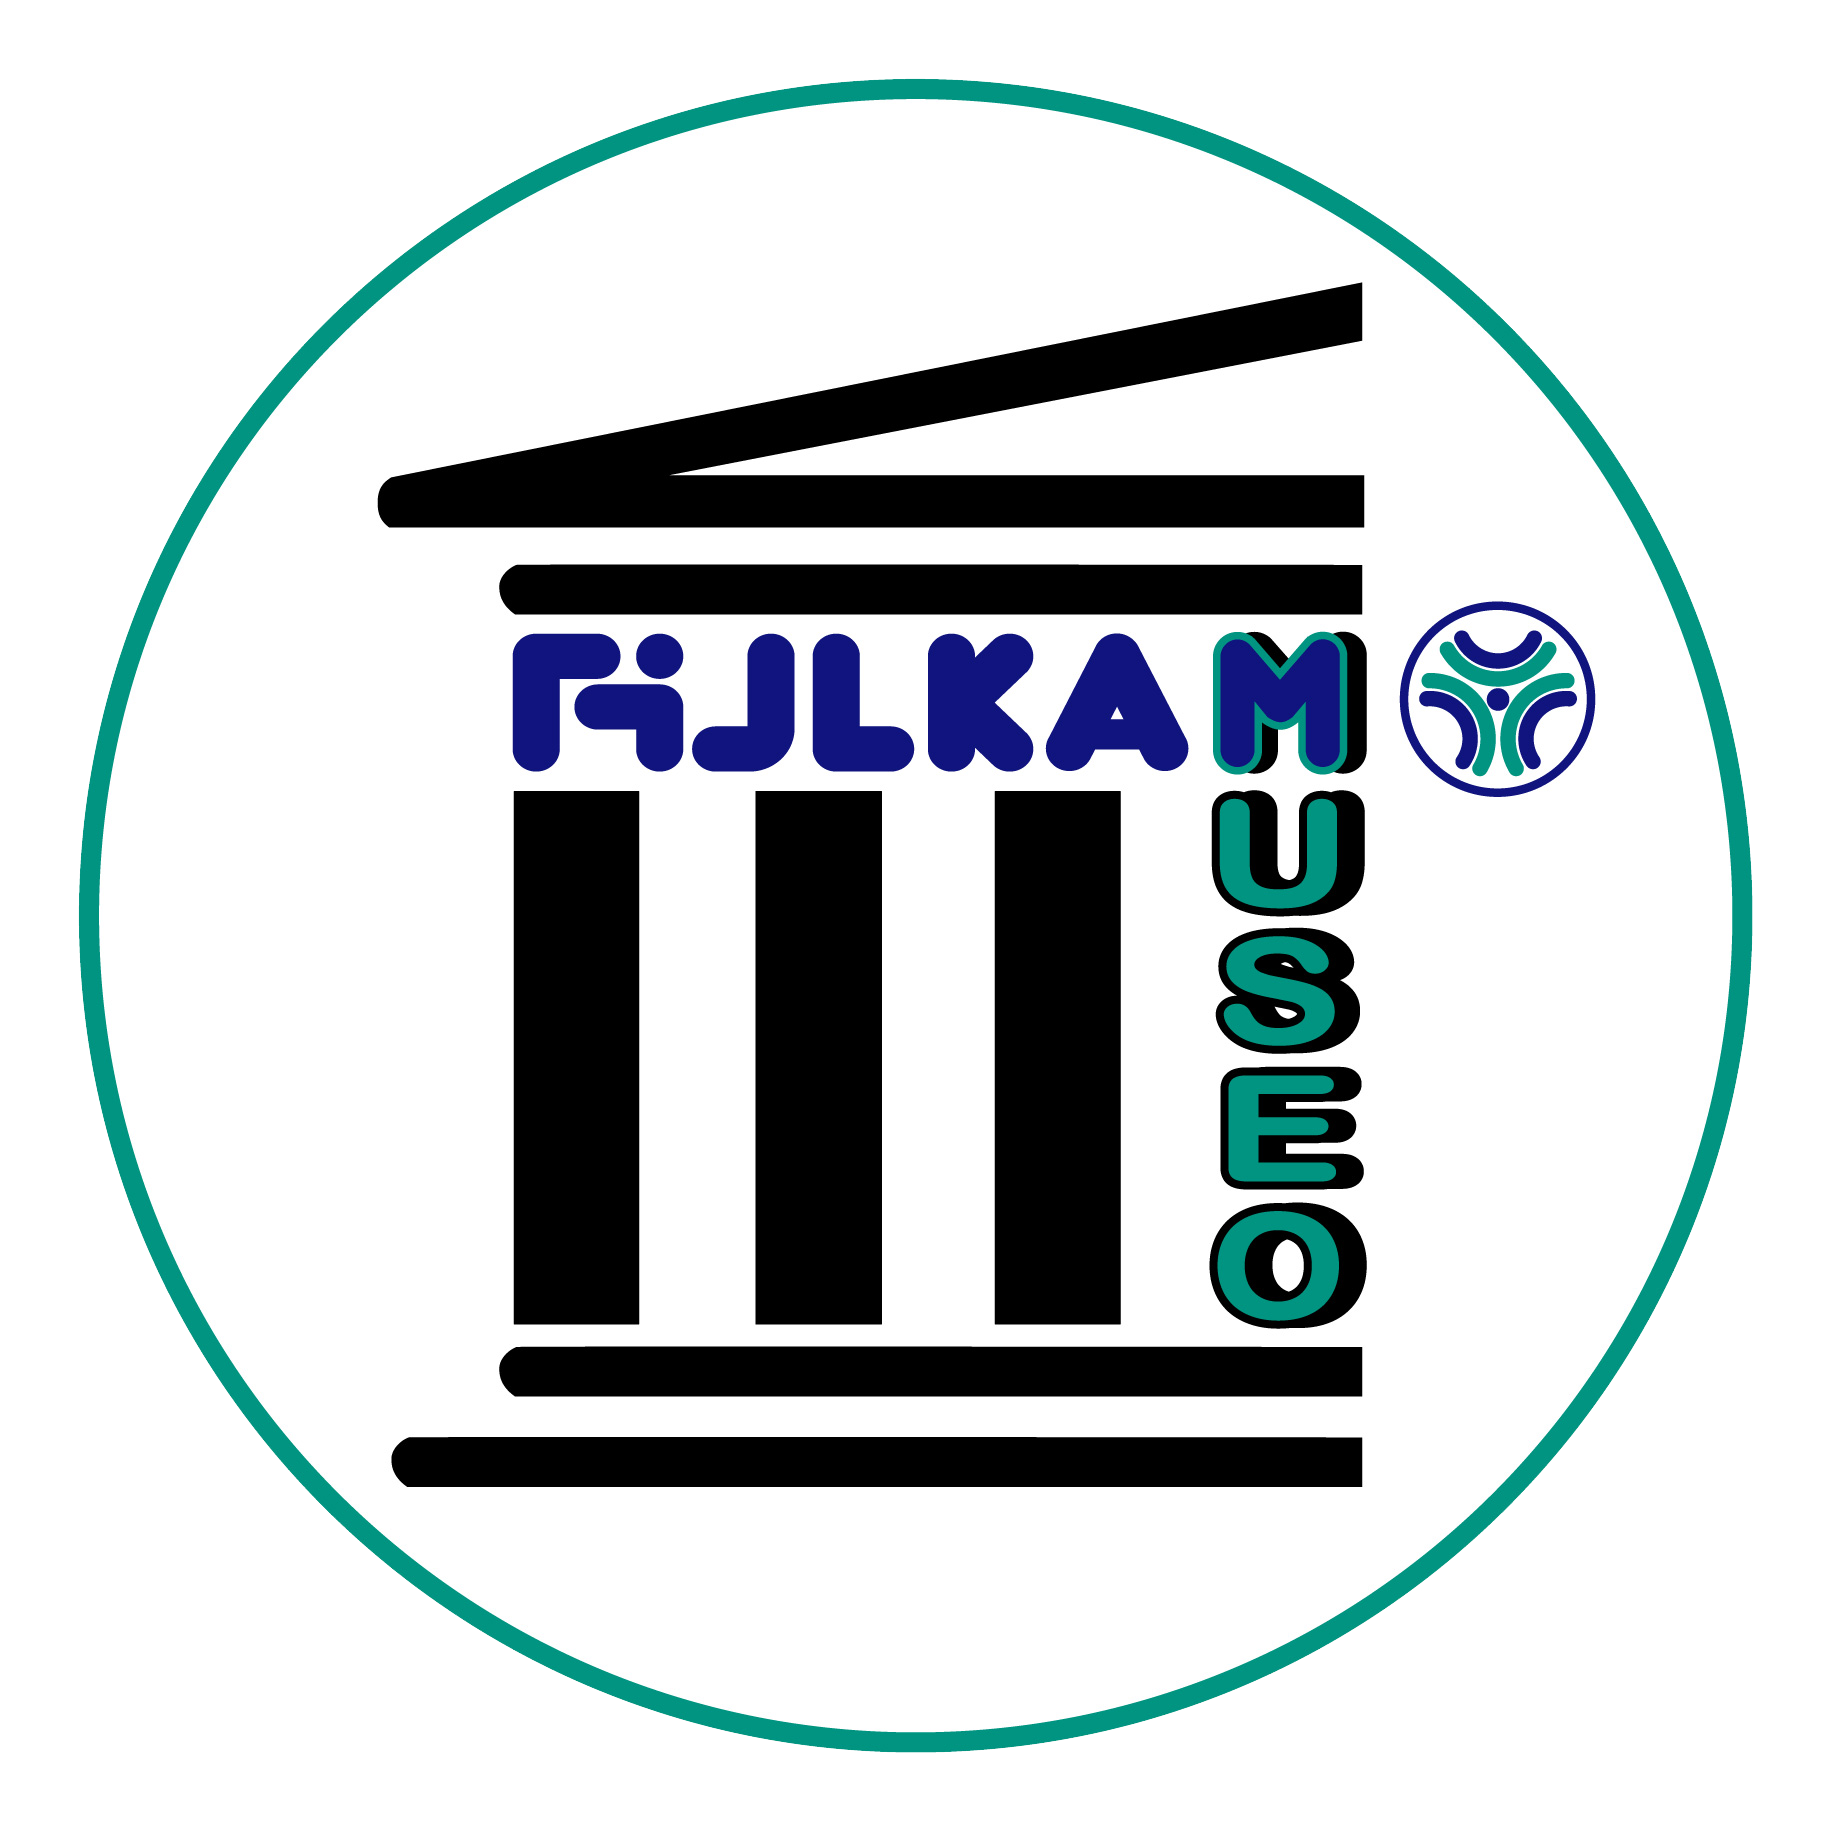 Museo FIJLKAM logo